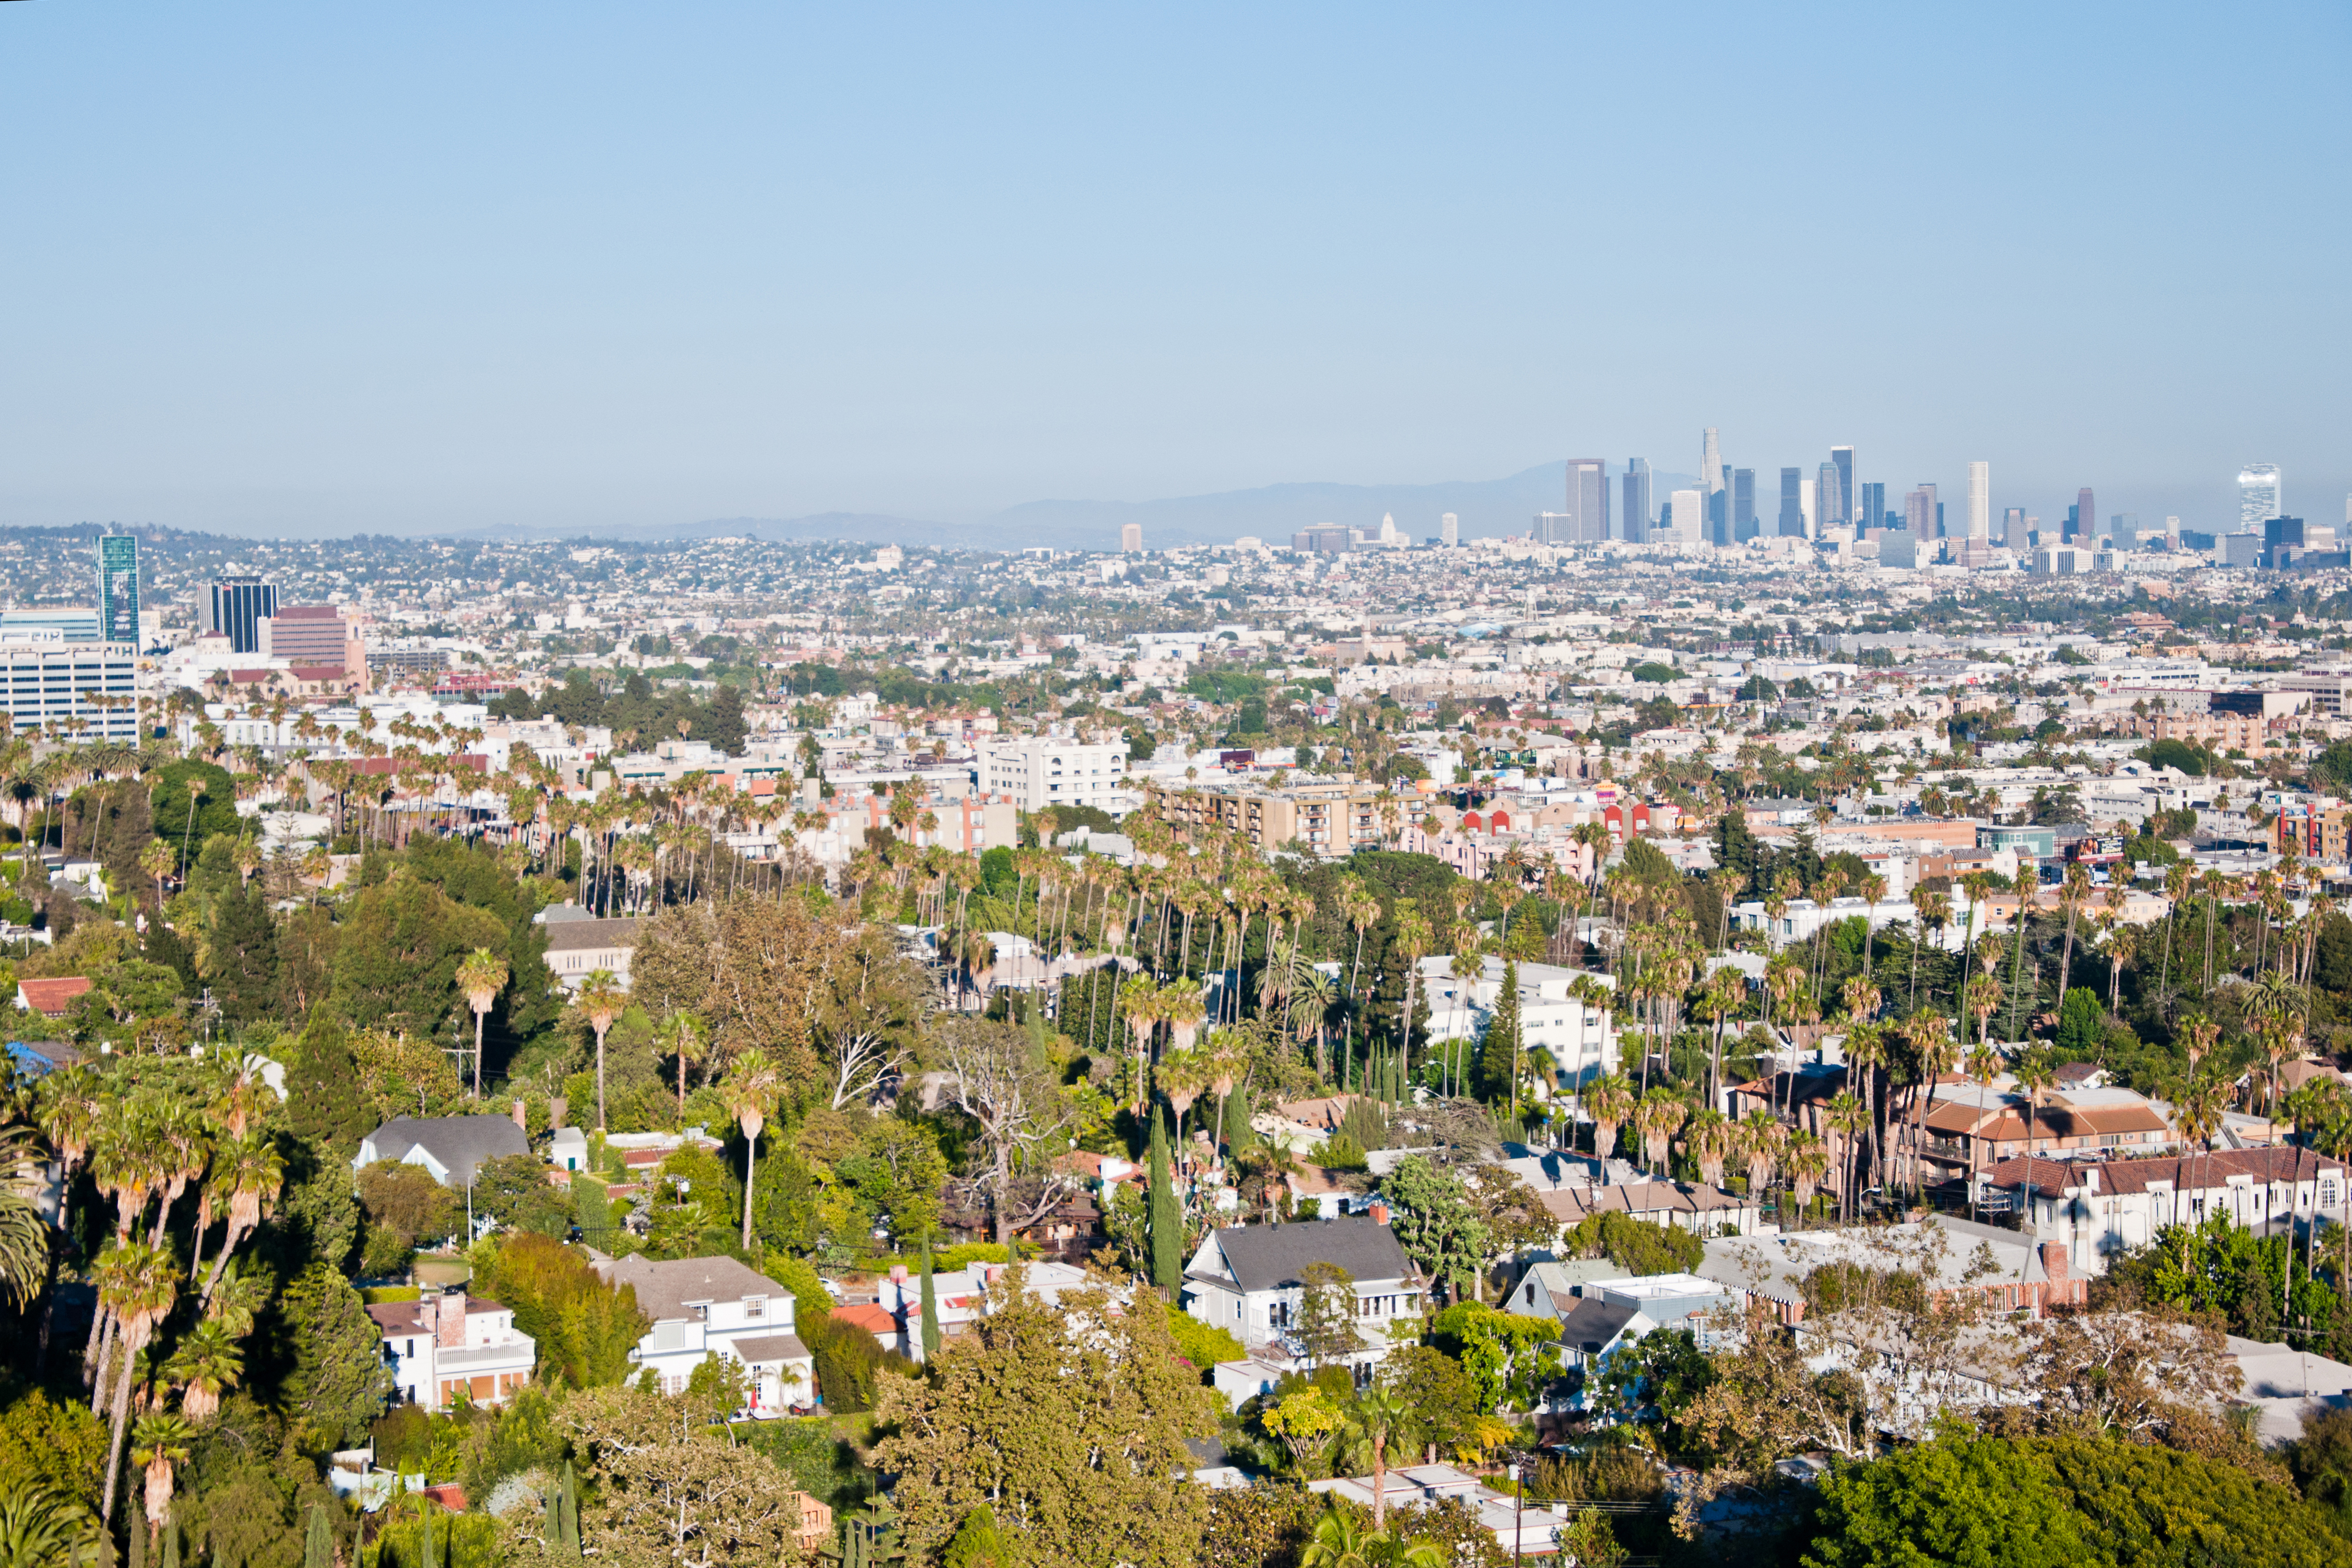 Los Angeles aerial